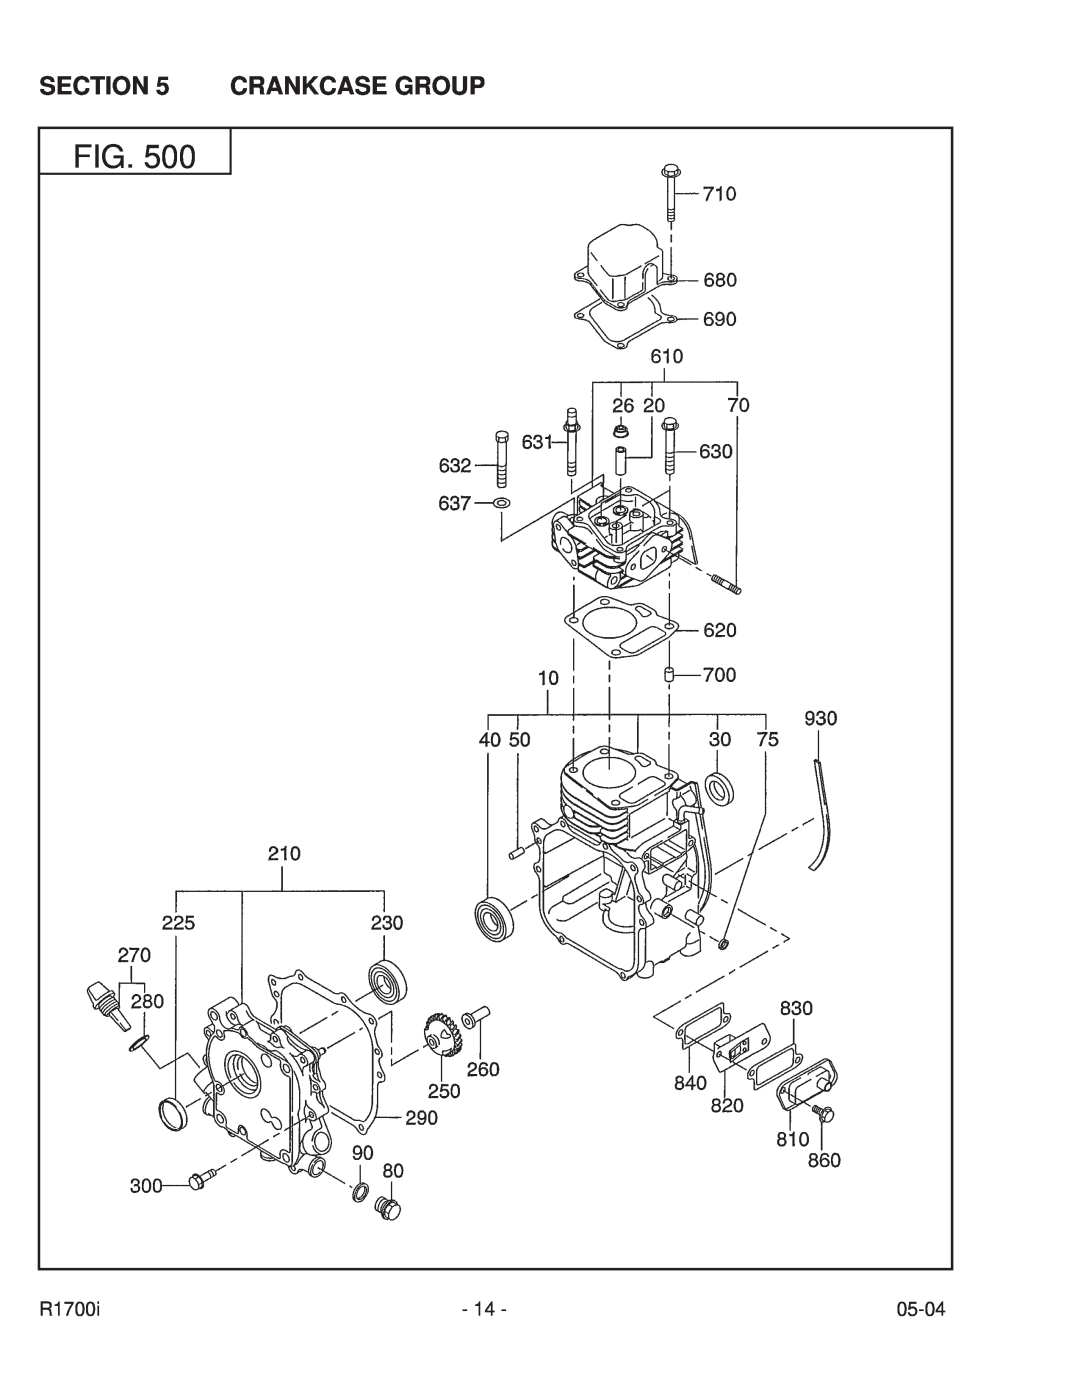 Subaru Robin Power Products PUB-GP6050 manual Crankcase Group, R1700i, 05-04 